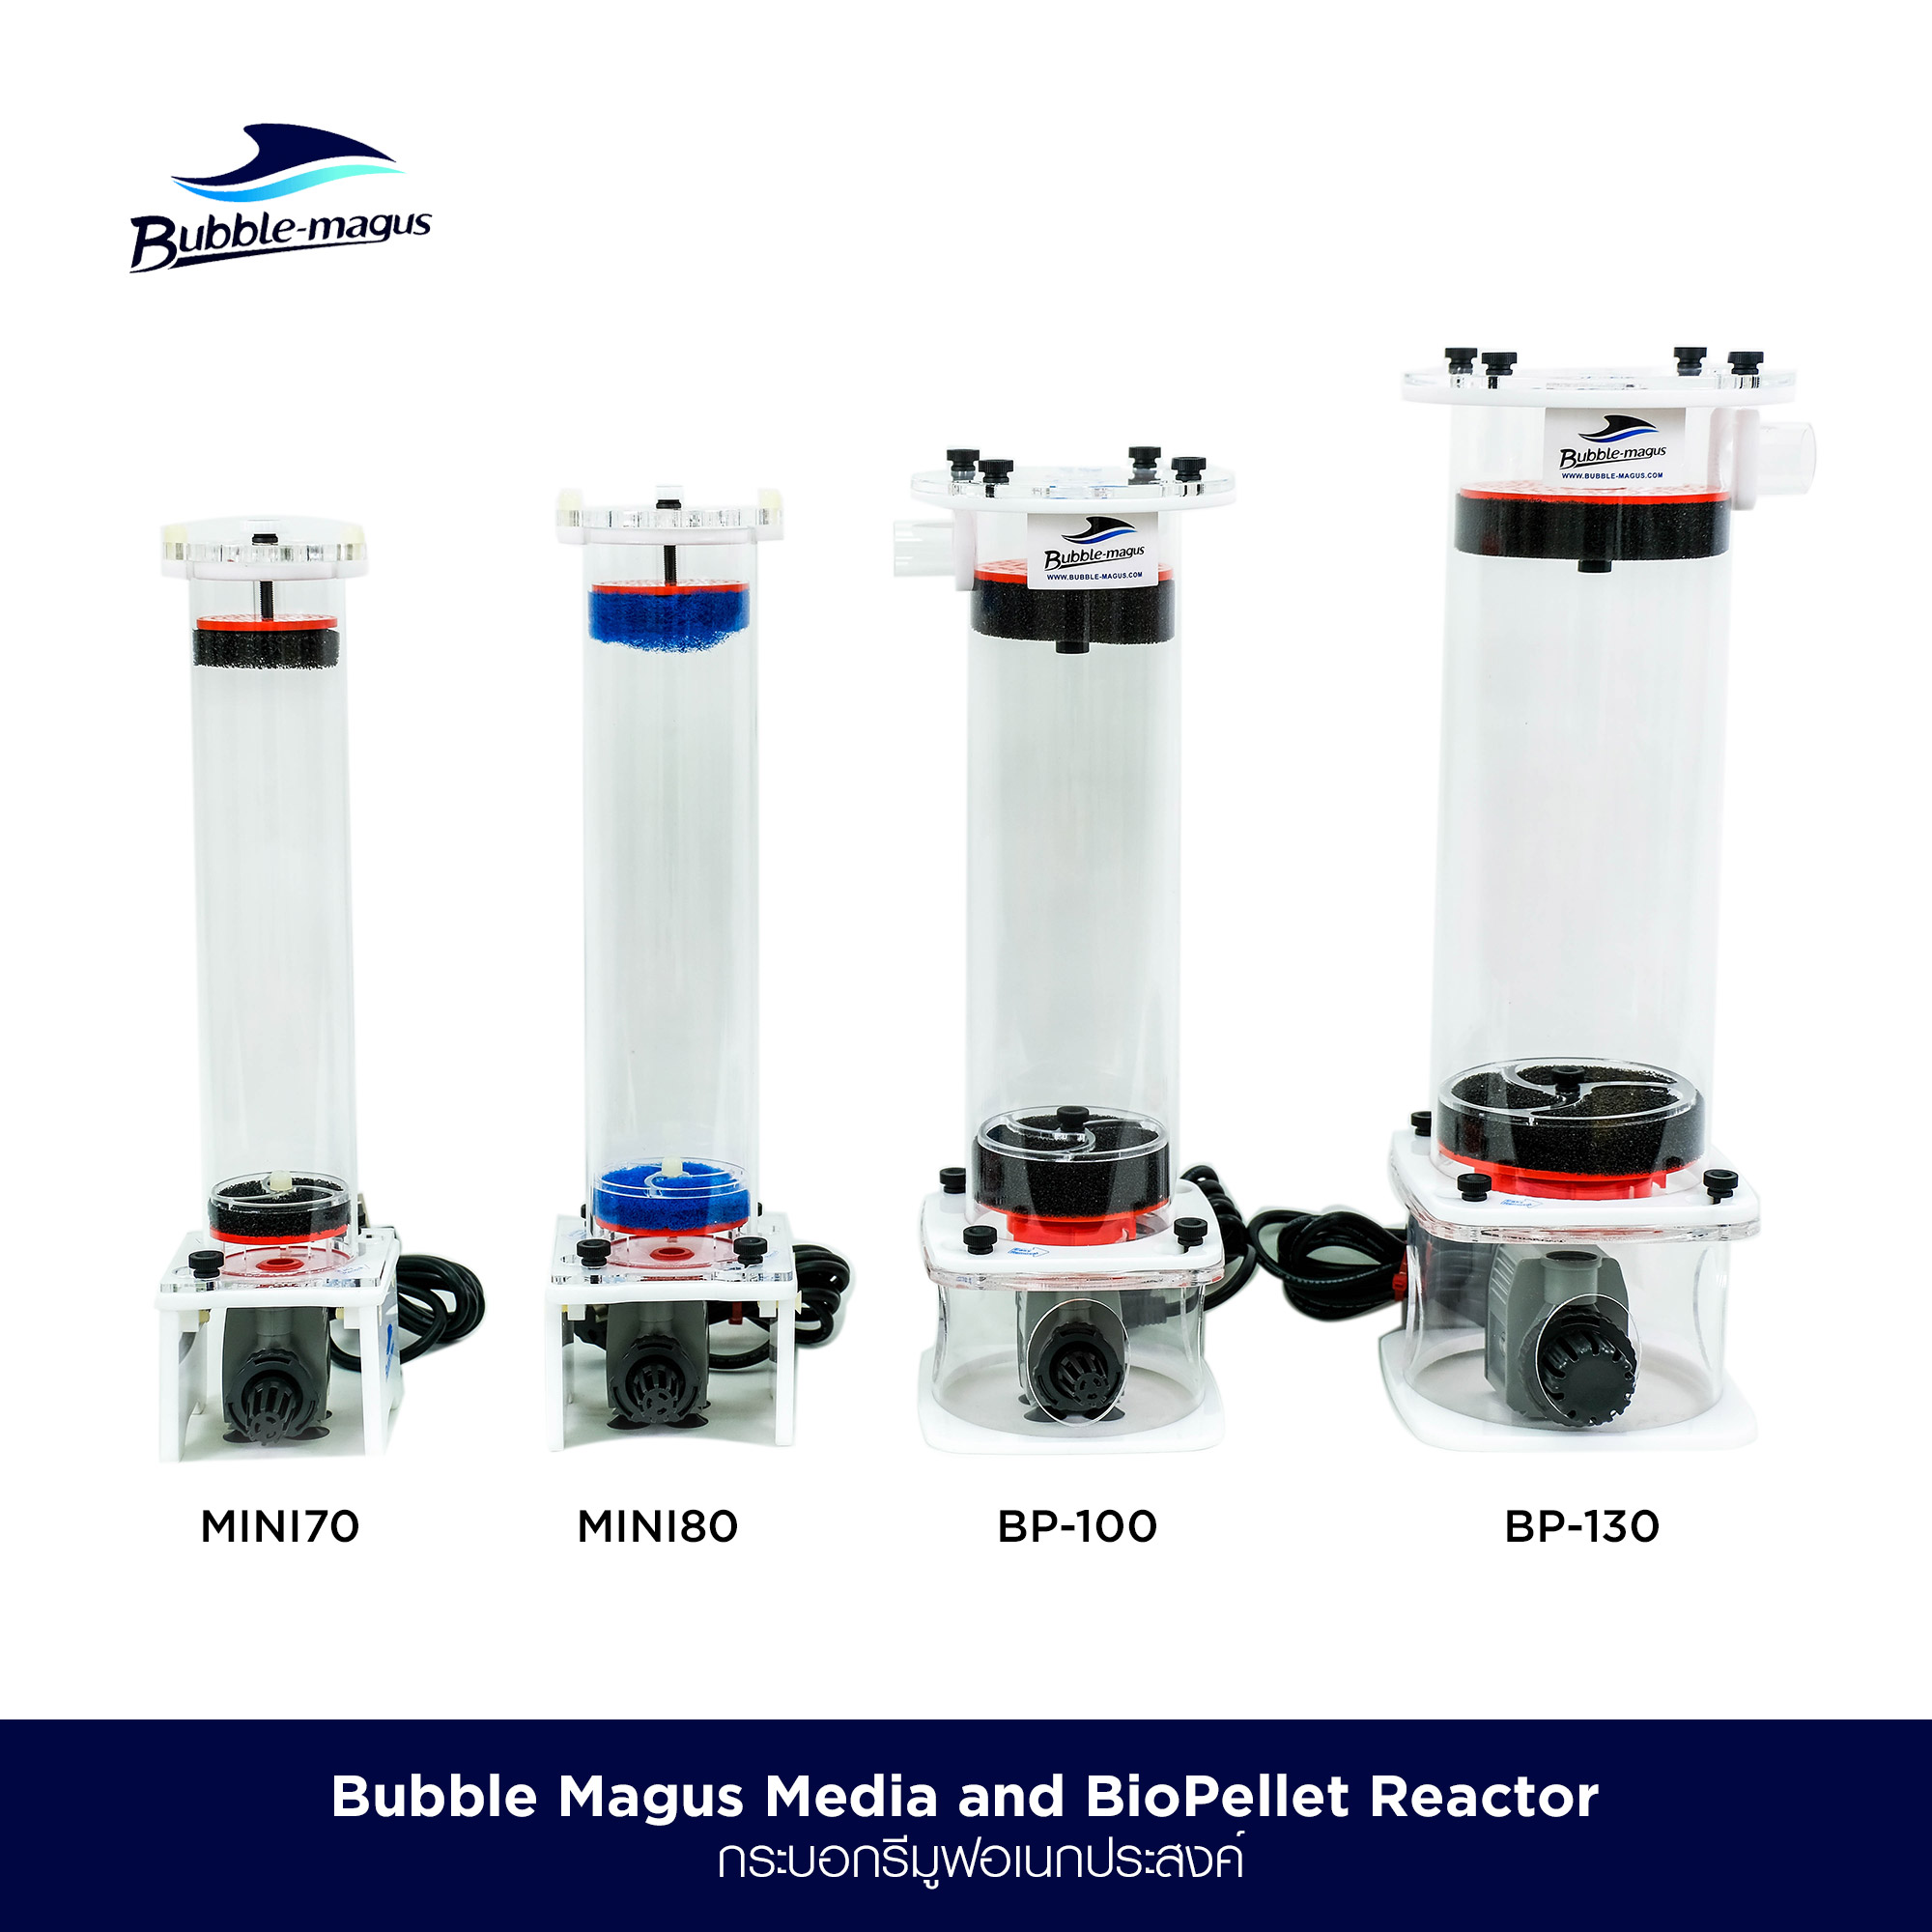 Bubble Magus BioPellet and Media Reactor กระบอกรีมูฟใส่มีเดีย แบบอเนกประสงค์  พร้อมปั้มในตัว (MINI70, MINI80, BP-100, BP-130)